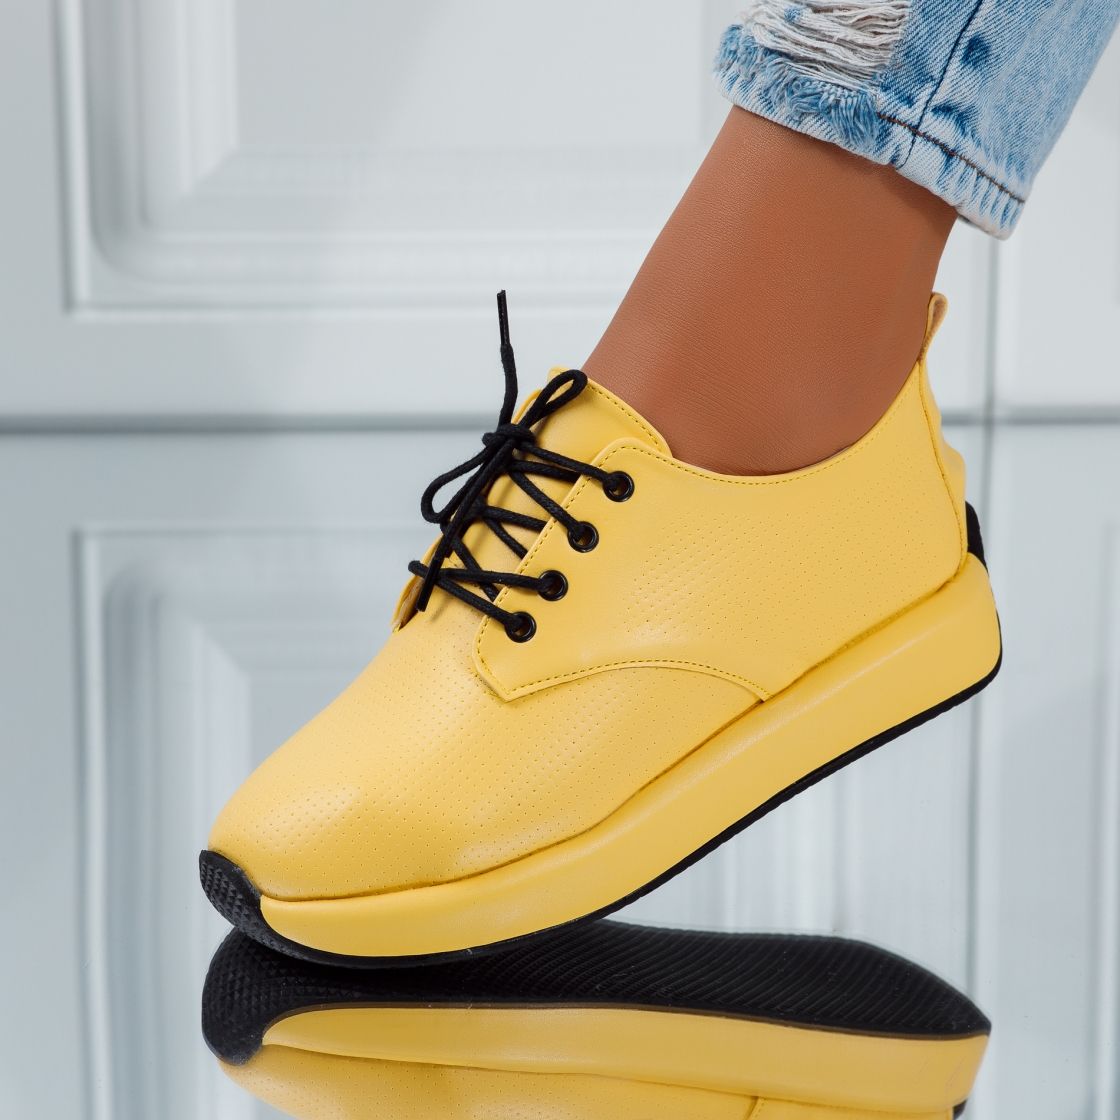 Alkalmi cipő sárga Chloe #5084M